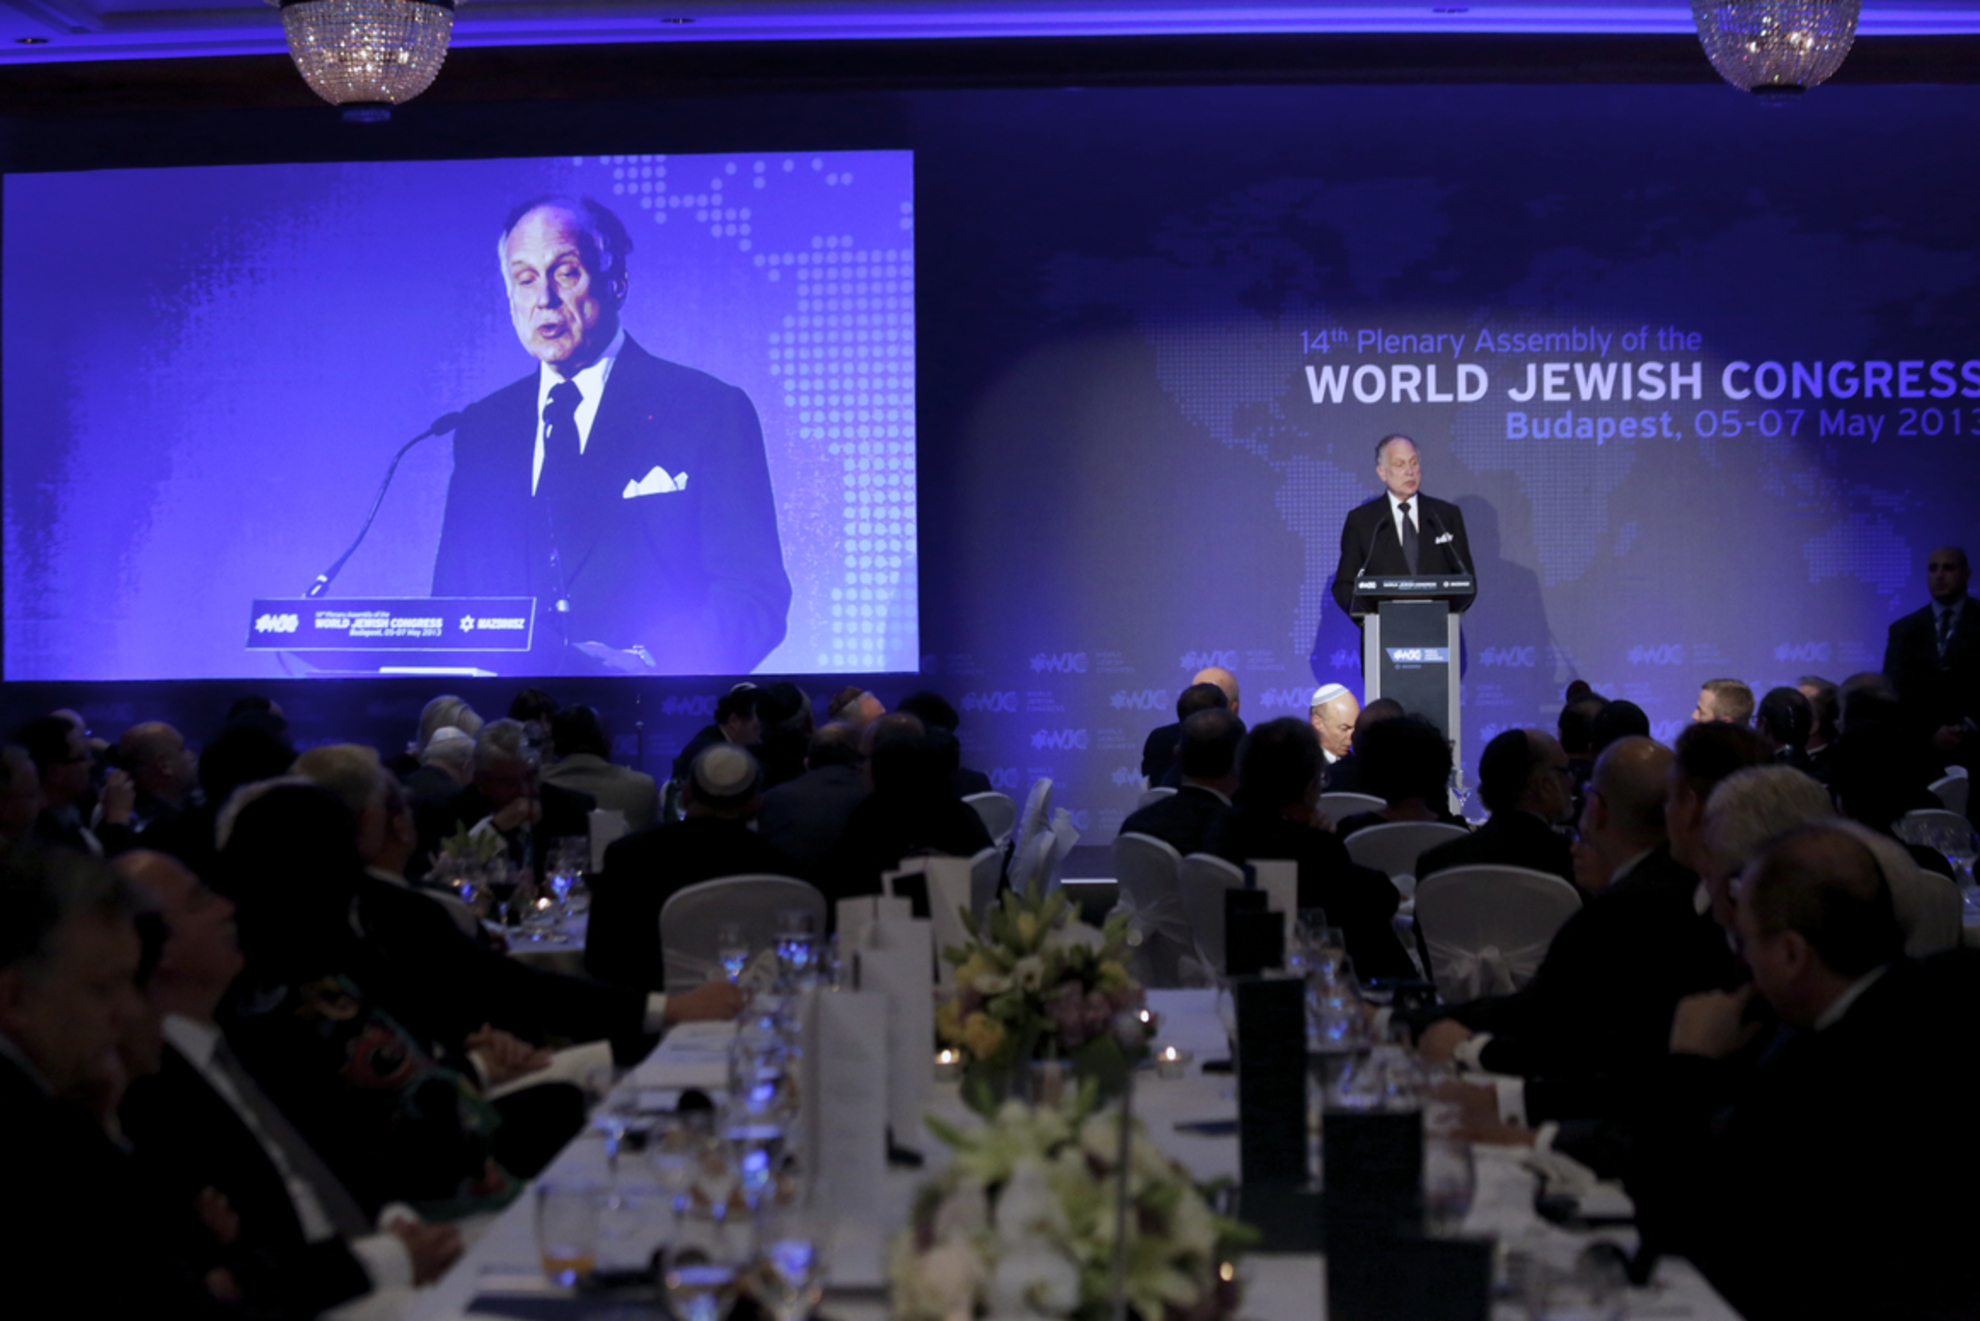 14th Plenary Assembly of the World Jewish Congress